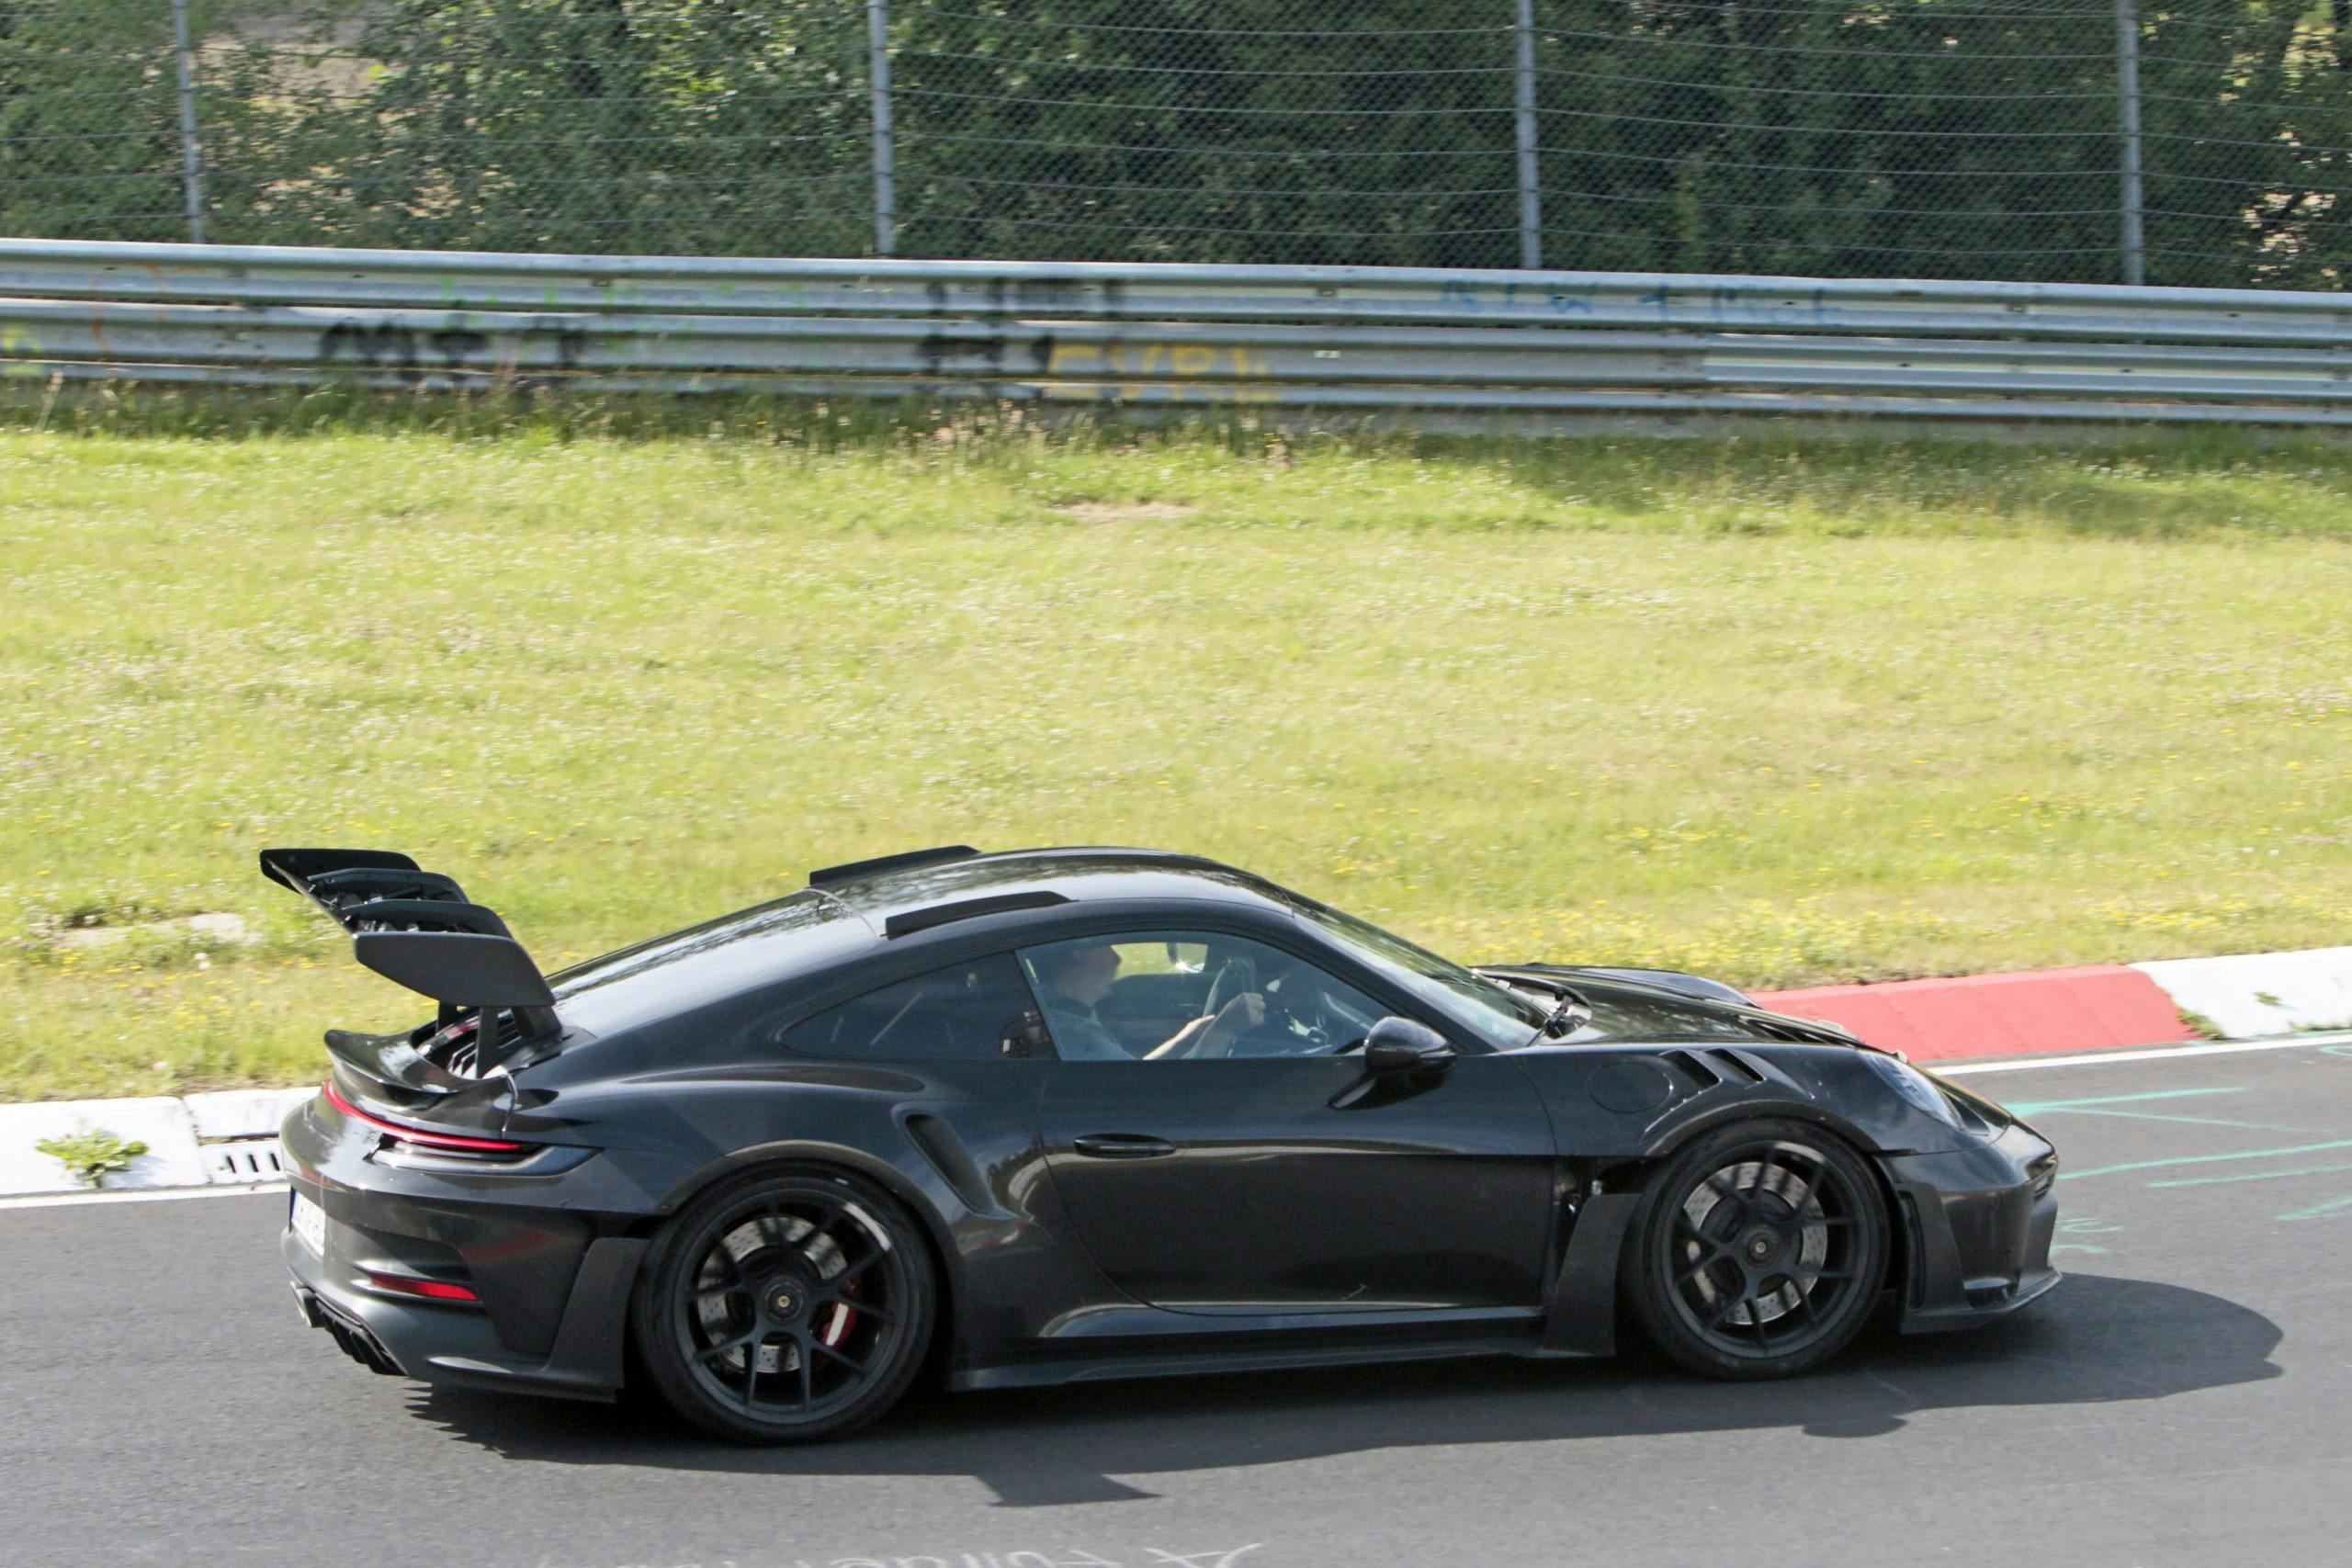 Porsche 911 GT3 RS Spy Shots exterior side profile and rear end